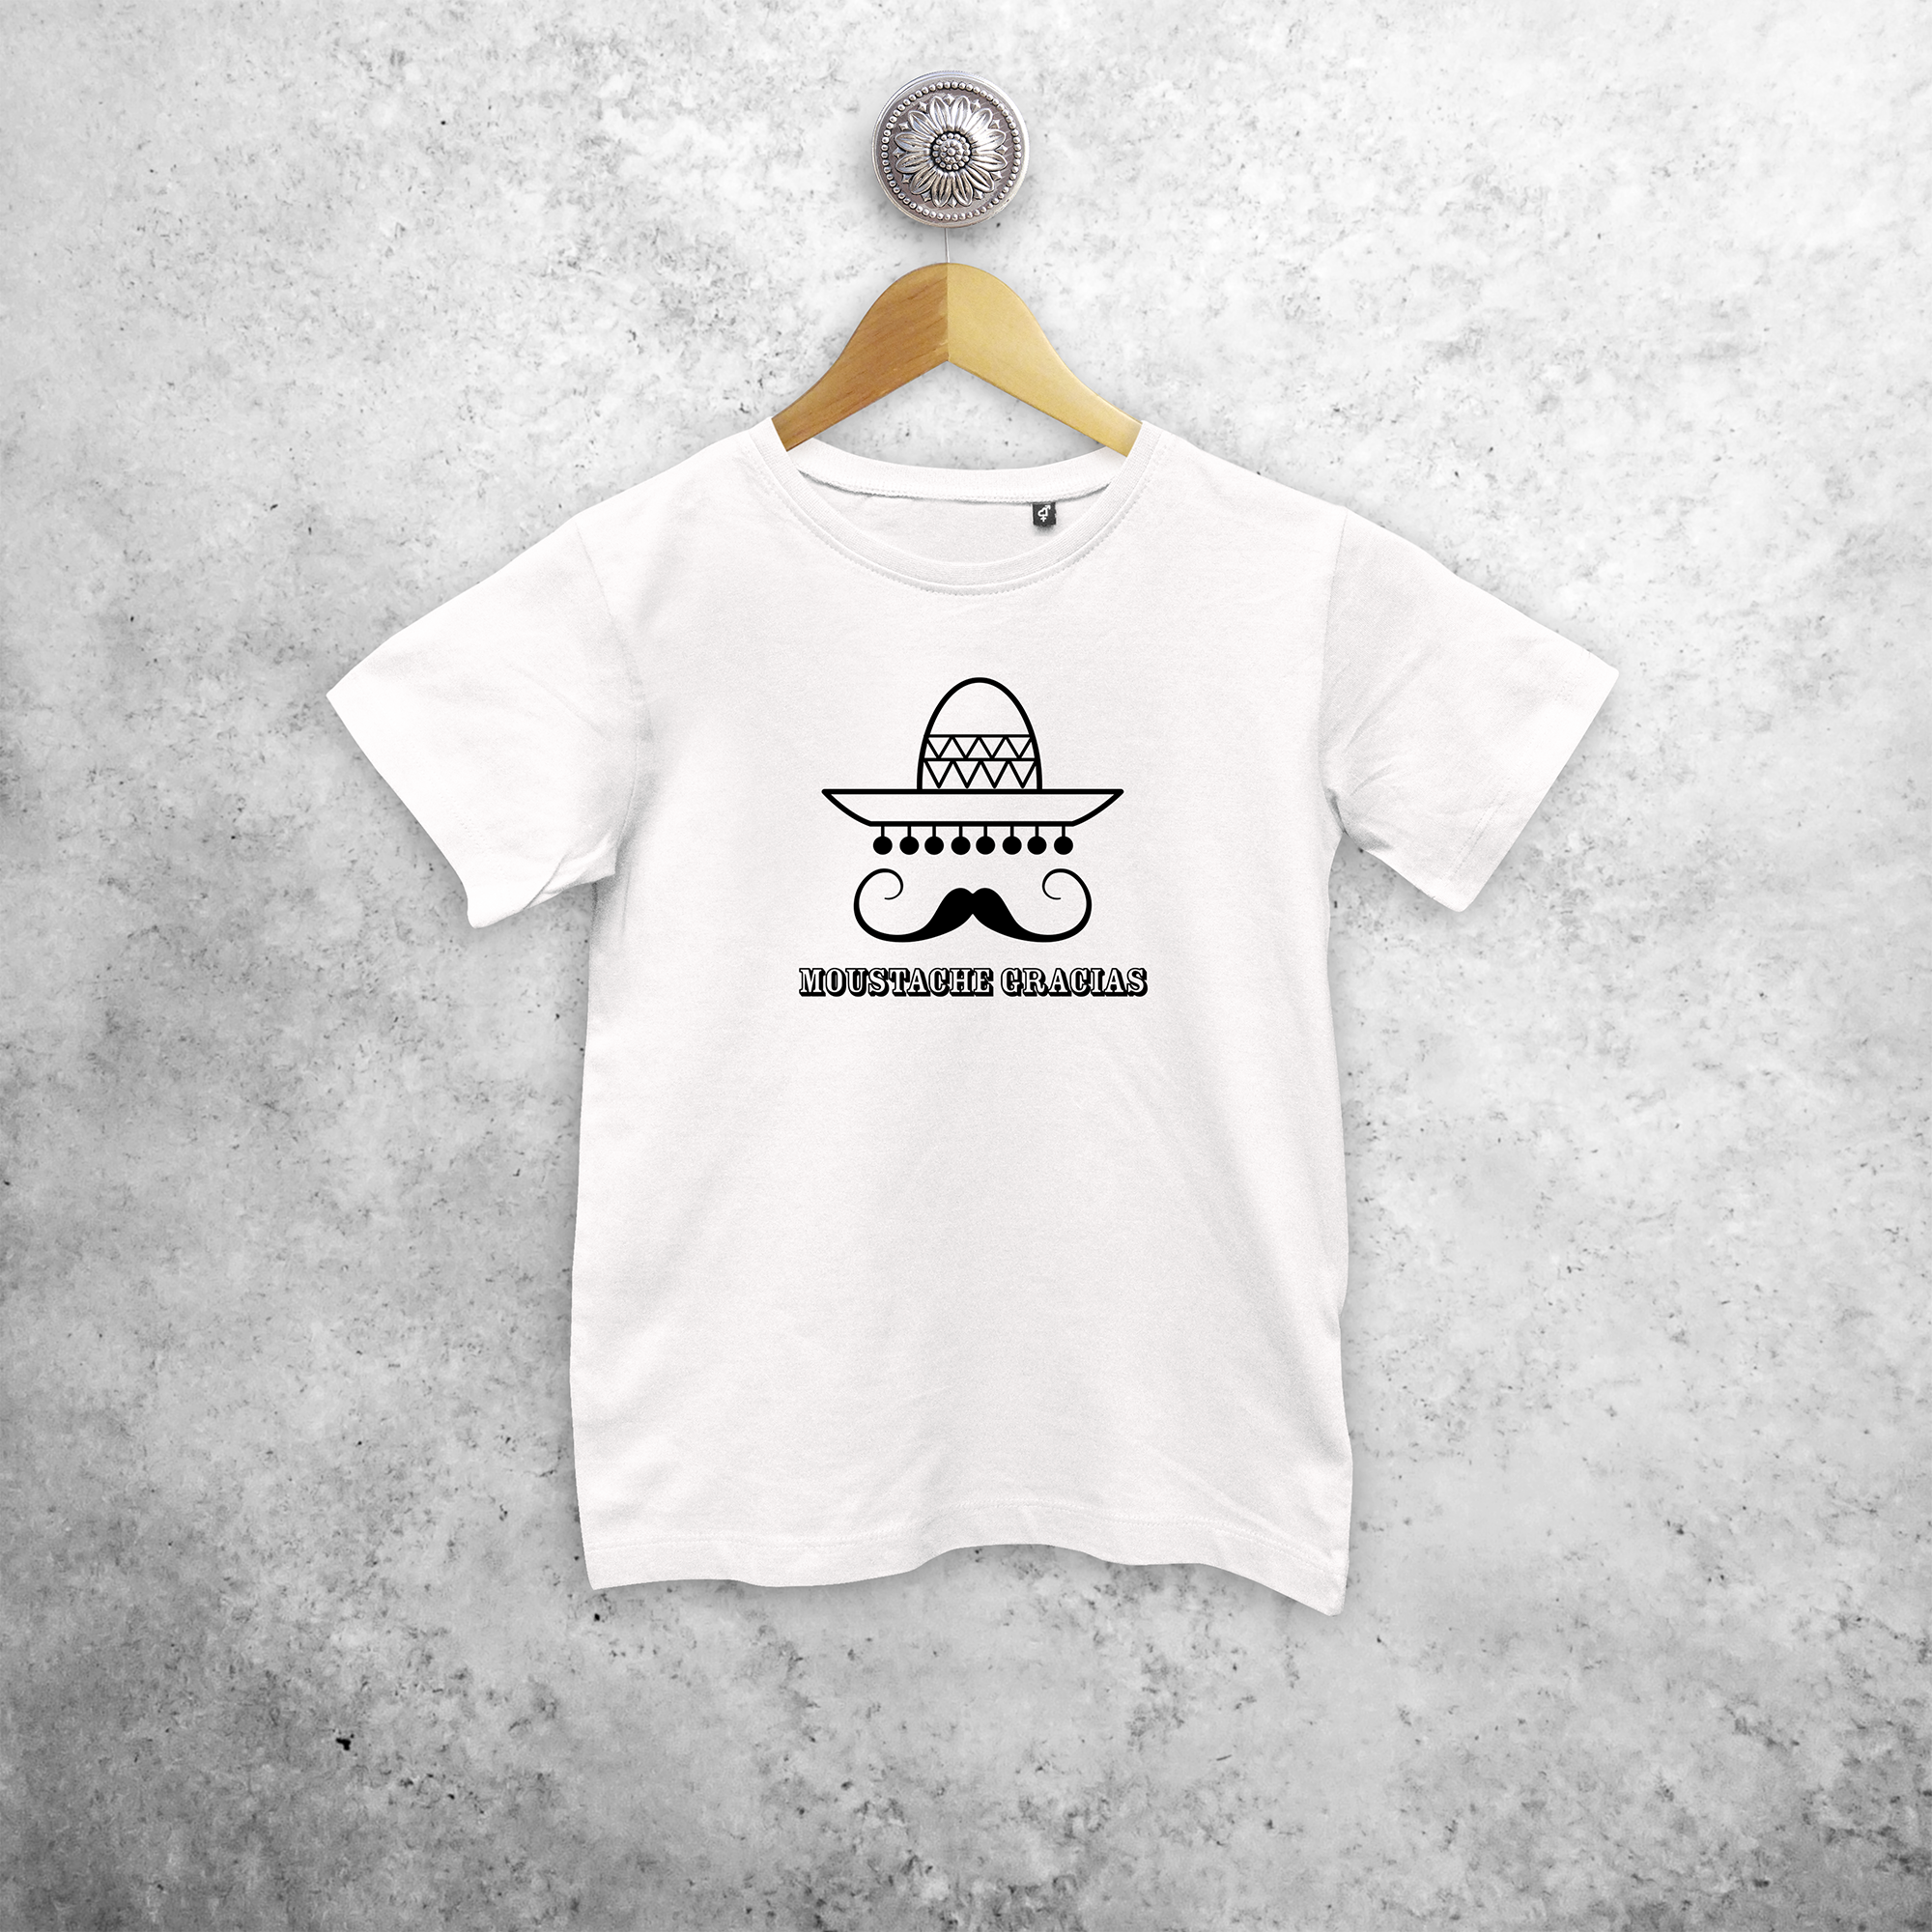 'Moustache gracias' kids shortsleeve shirt